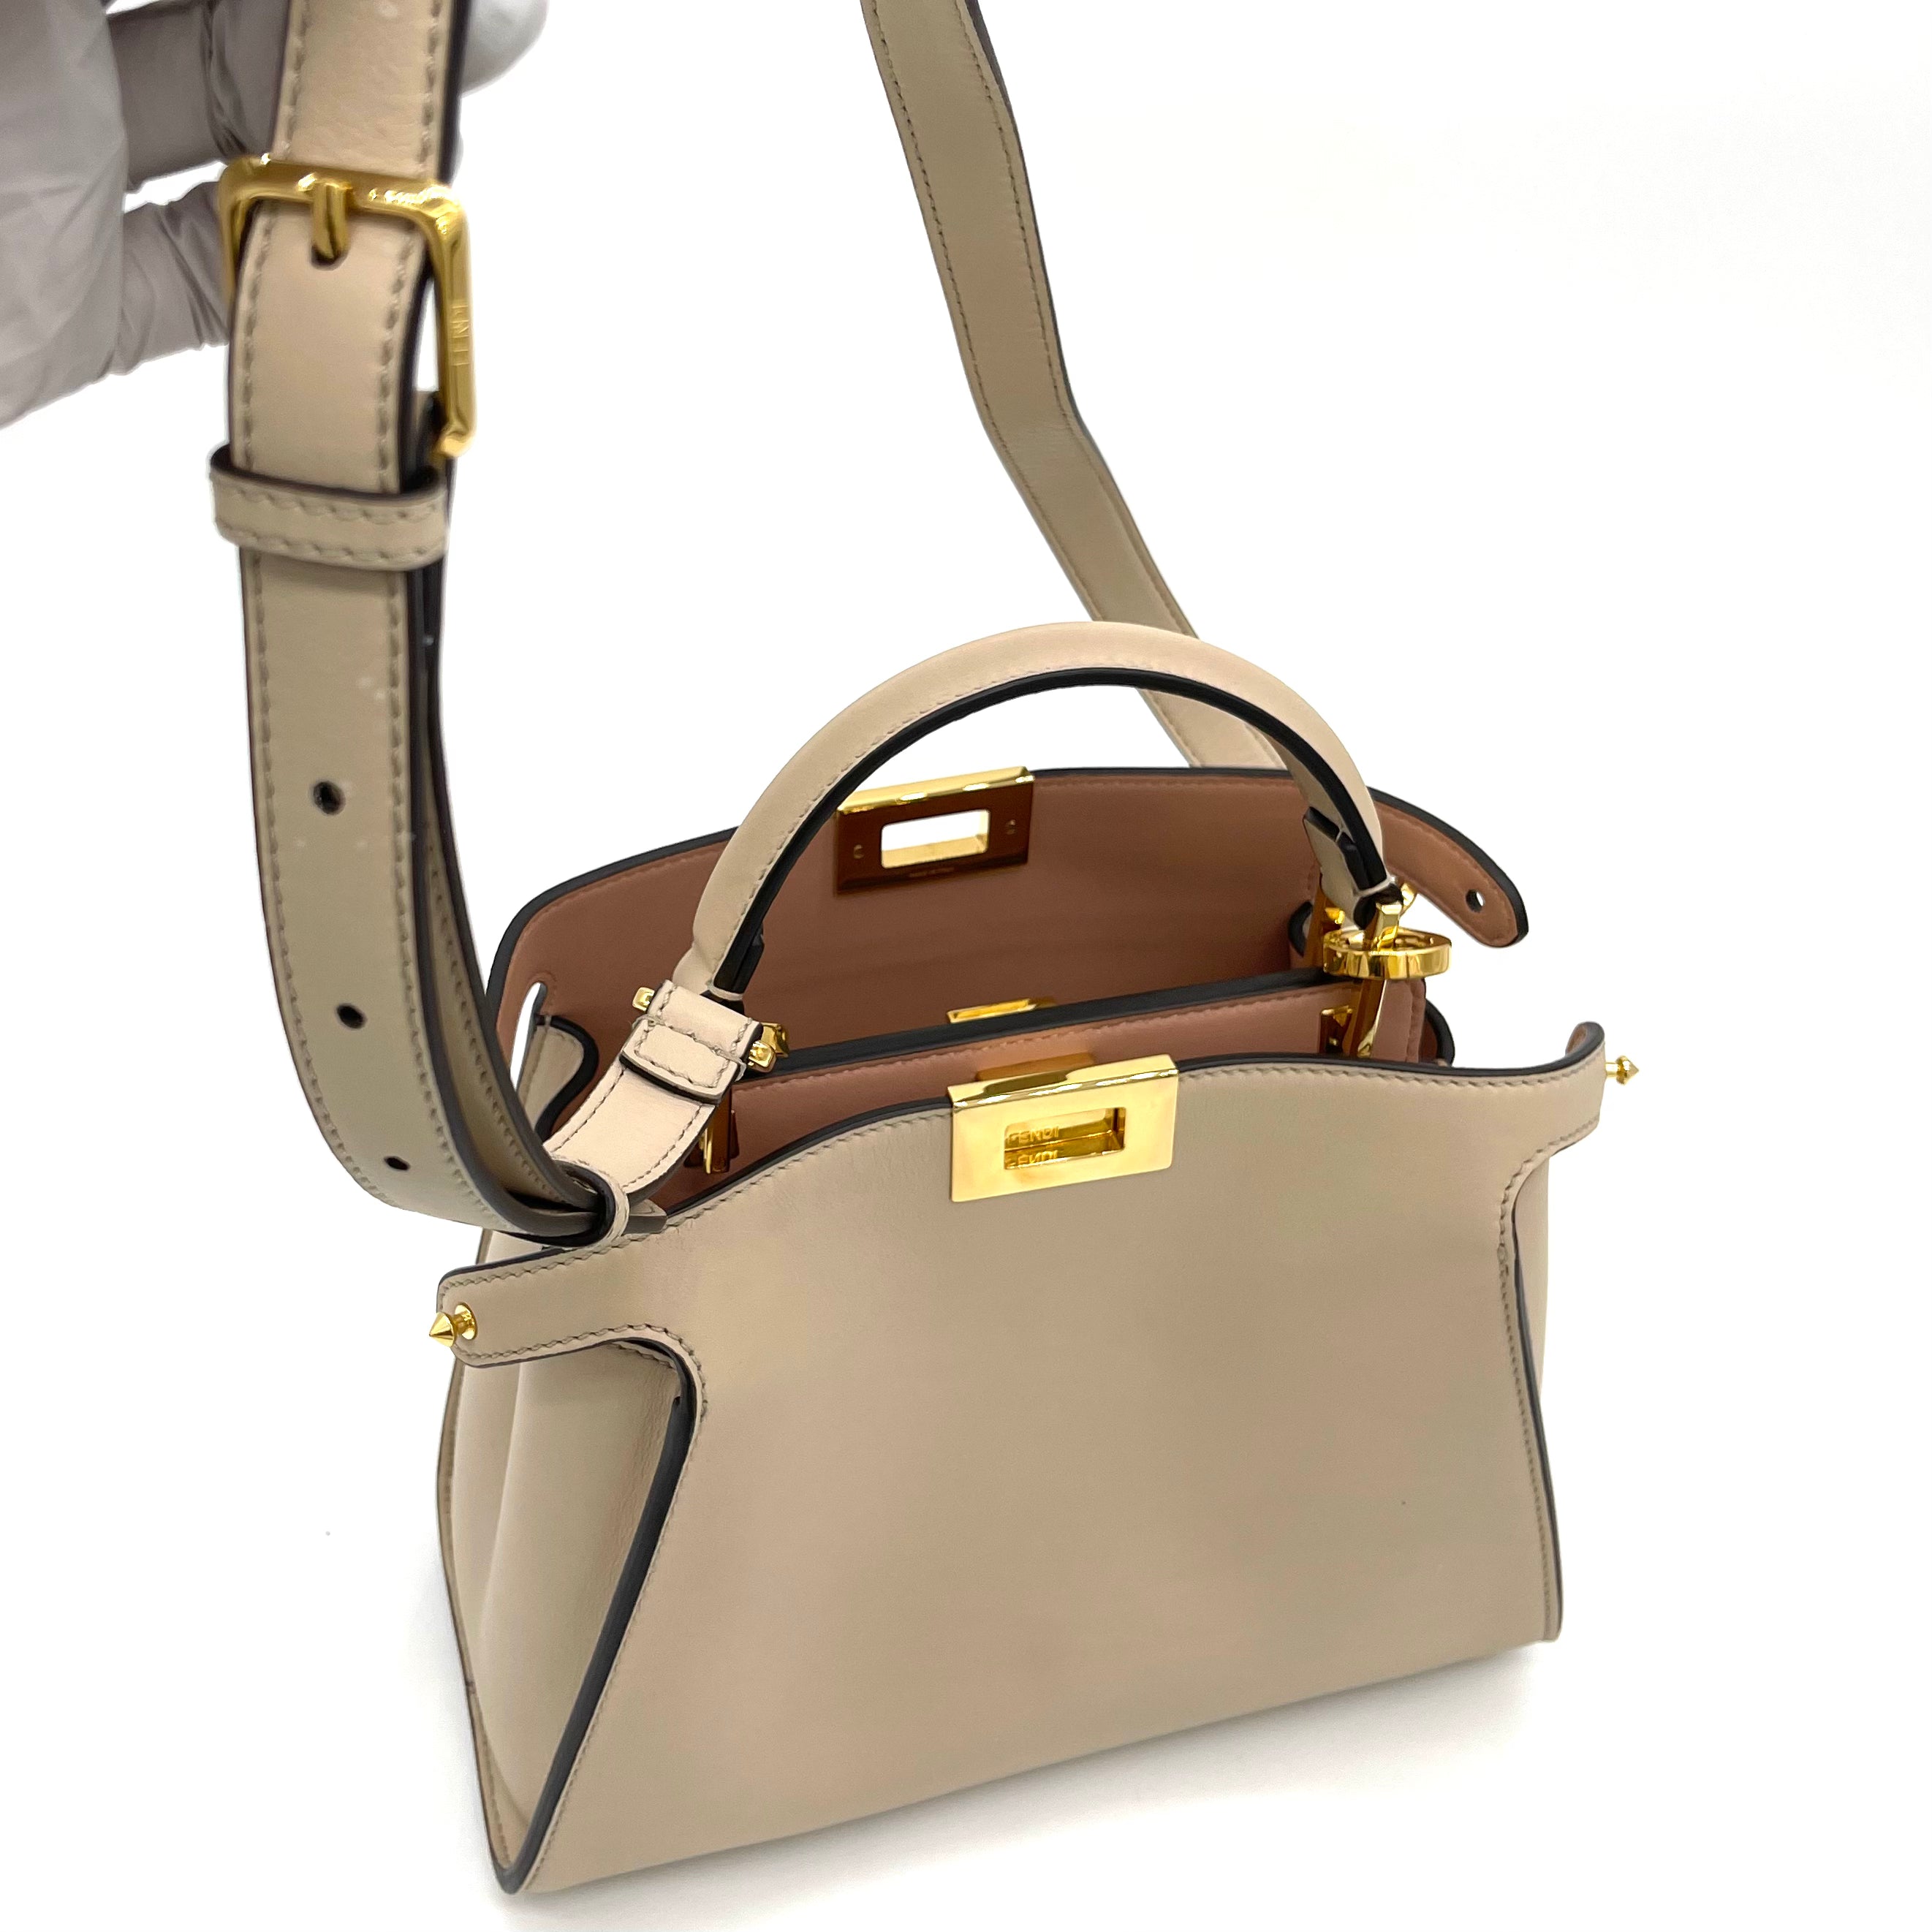 [NEW Condition]FENDI Peekaboo Mini beige leather bag